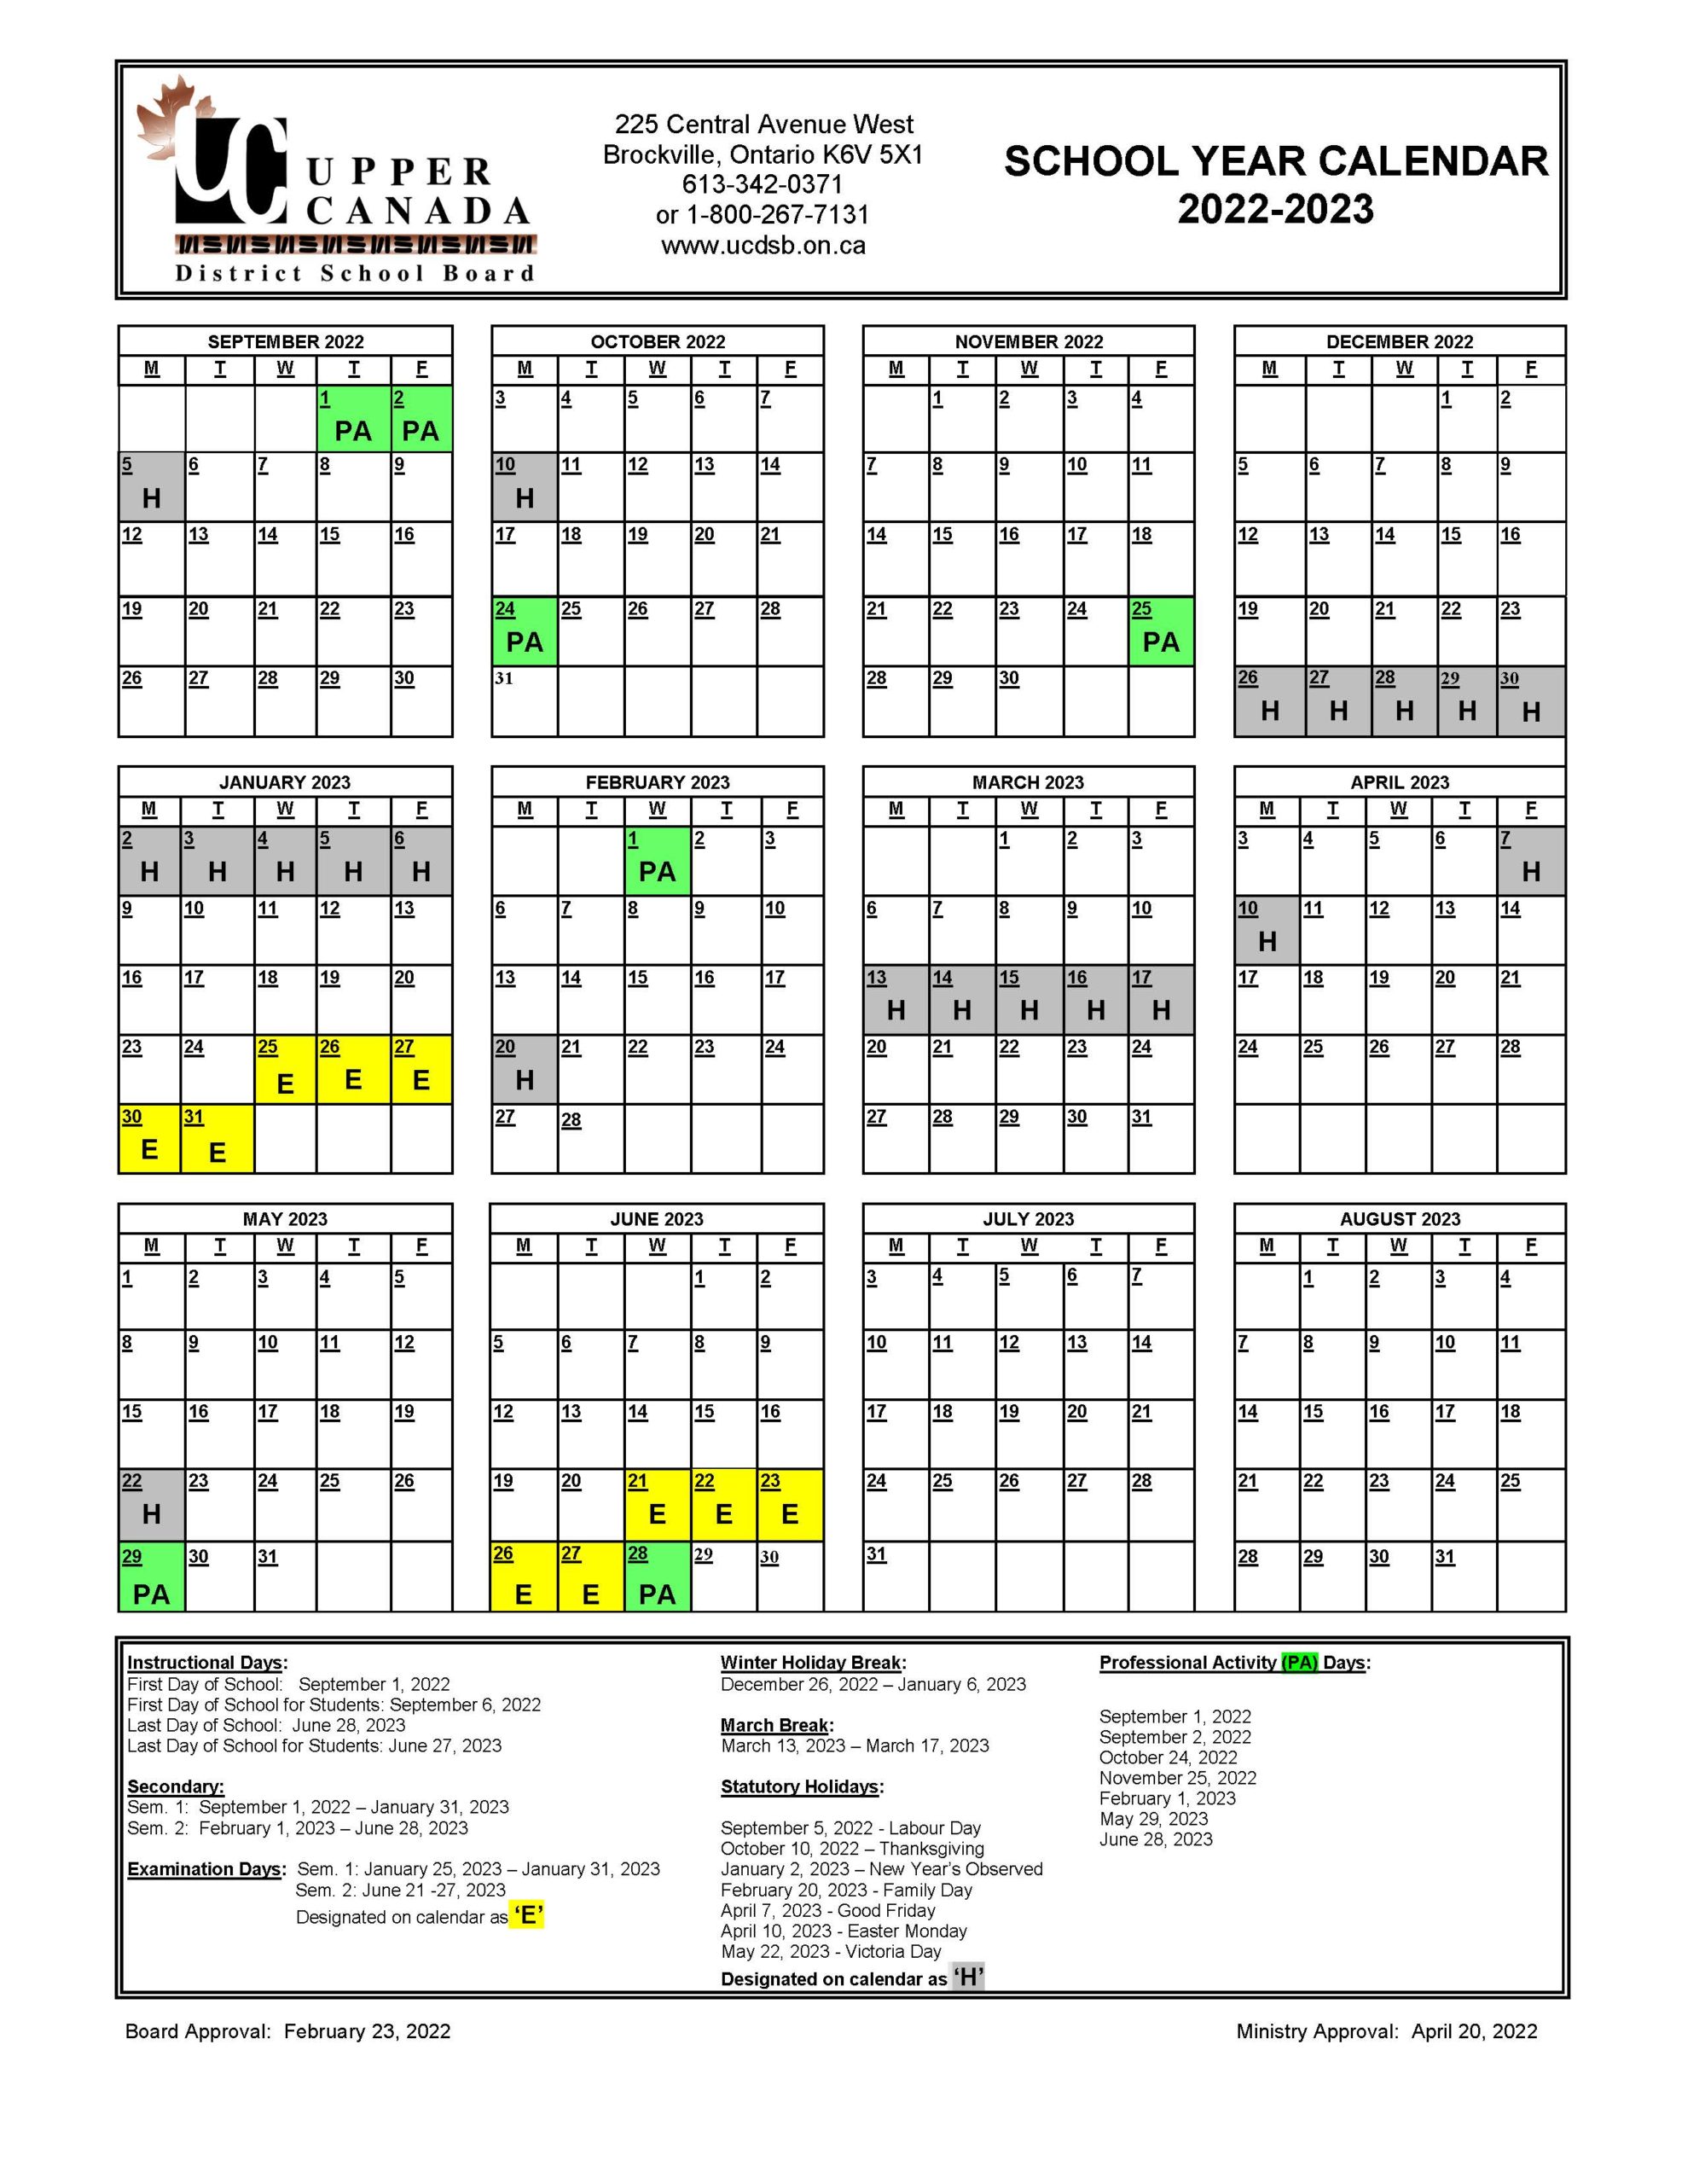 School Calendars – Student Transportation of Eastern Ontario